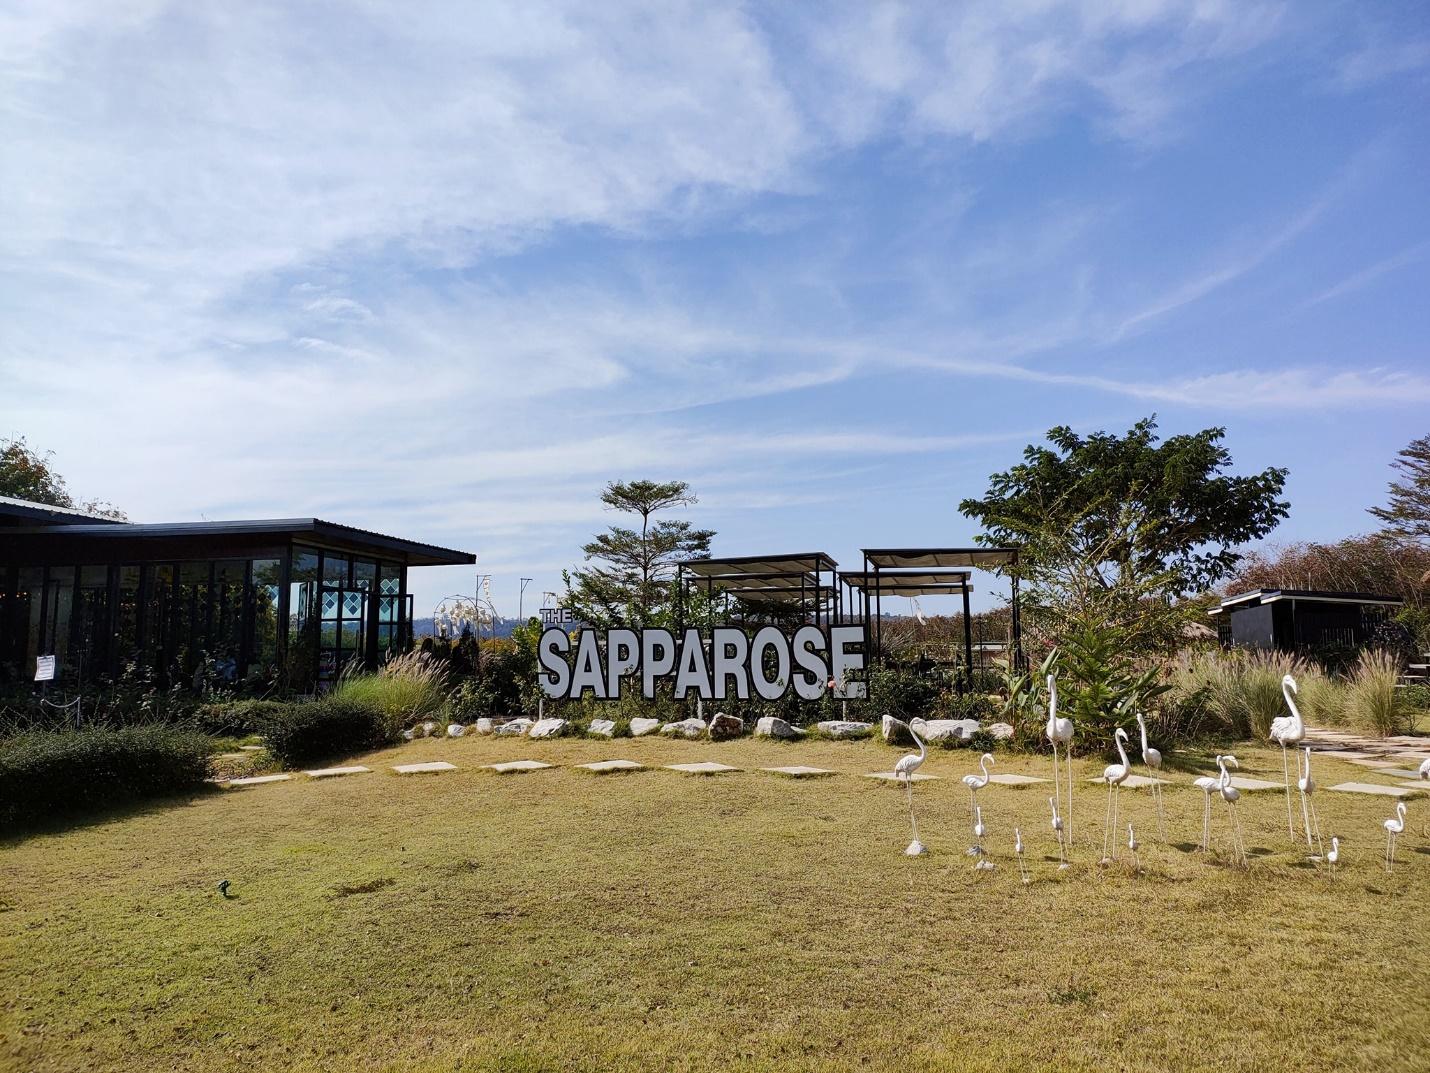 2. The Sapparose Cafe' 04